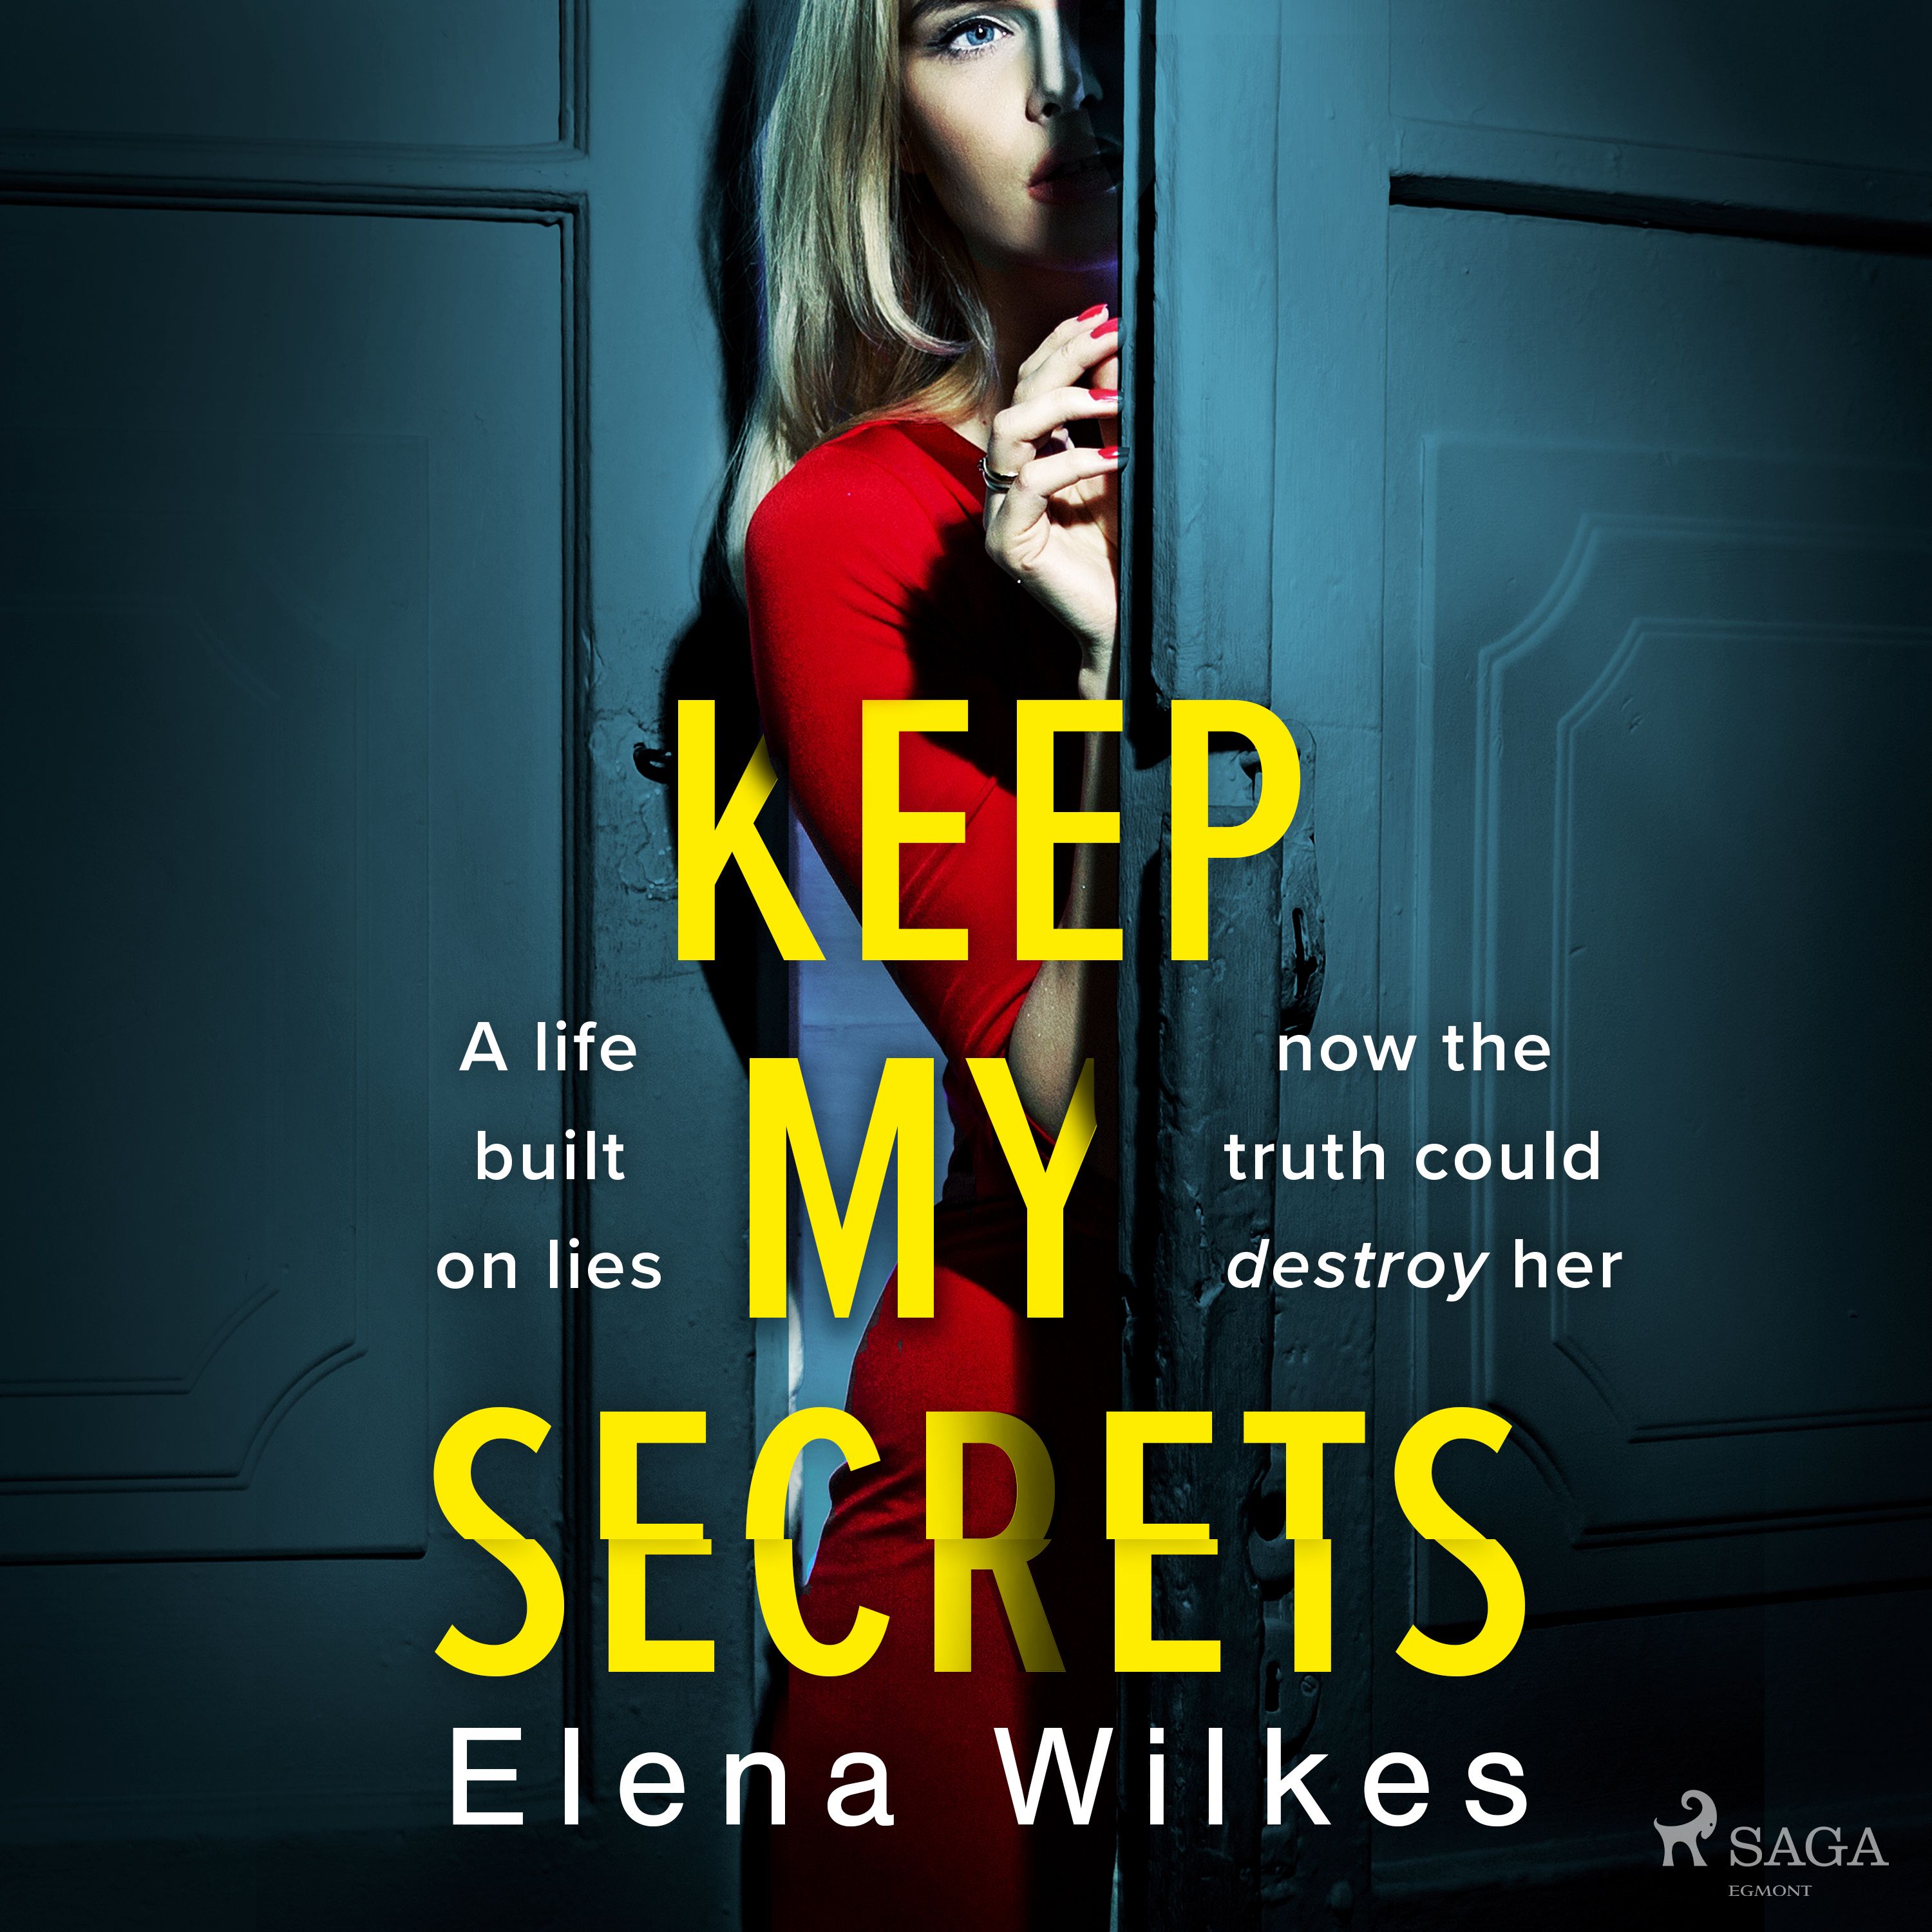 Keep My Secrets, ljudbok av Elena Wilkes